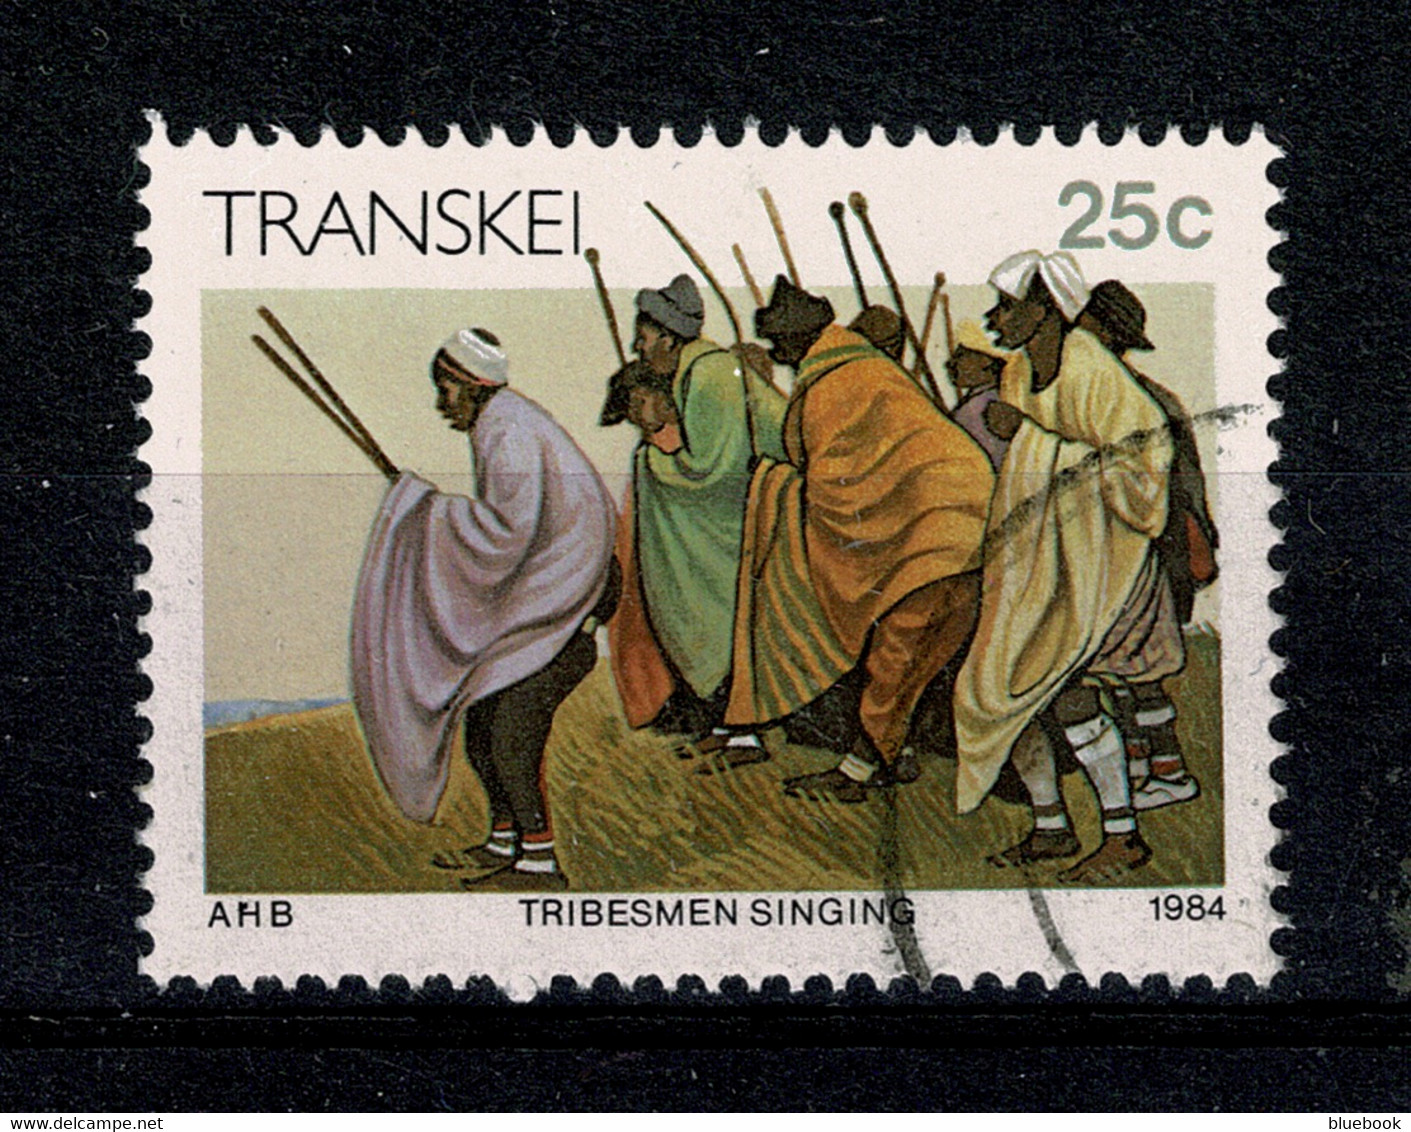 Ref 1463  - Transkei 1984 25c - Used Stamp SG 151 - Tribesmen Singing - Ethnic Theme - Transkei